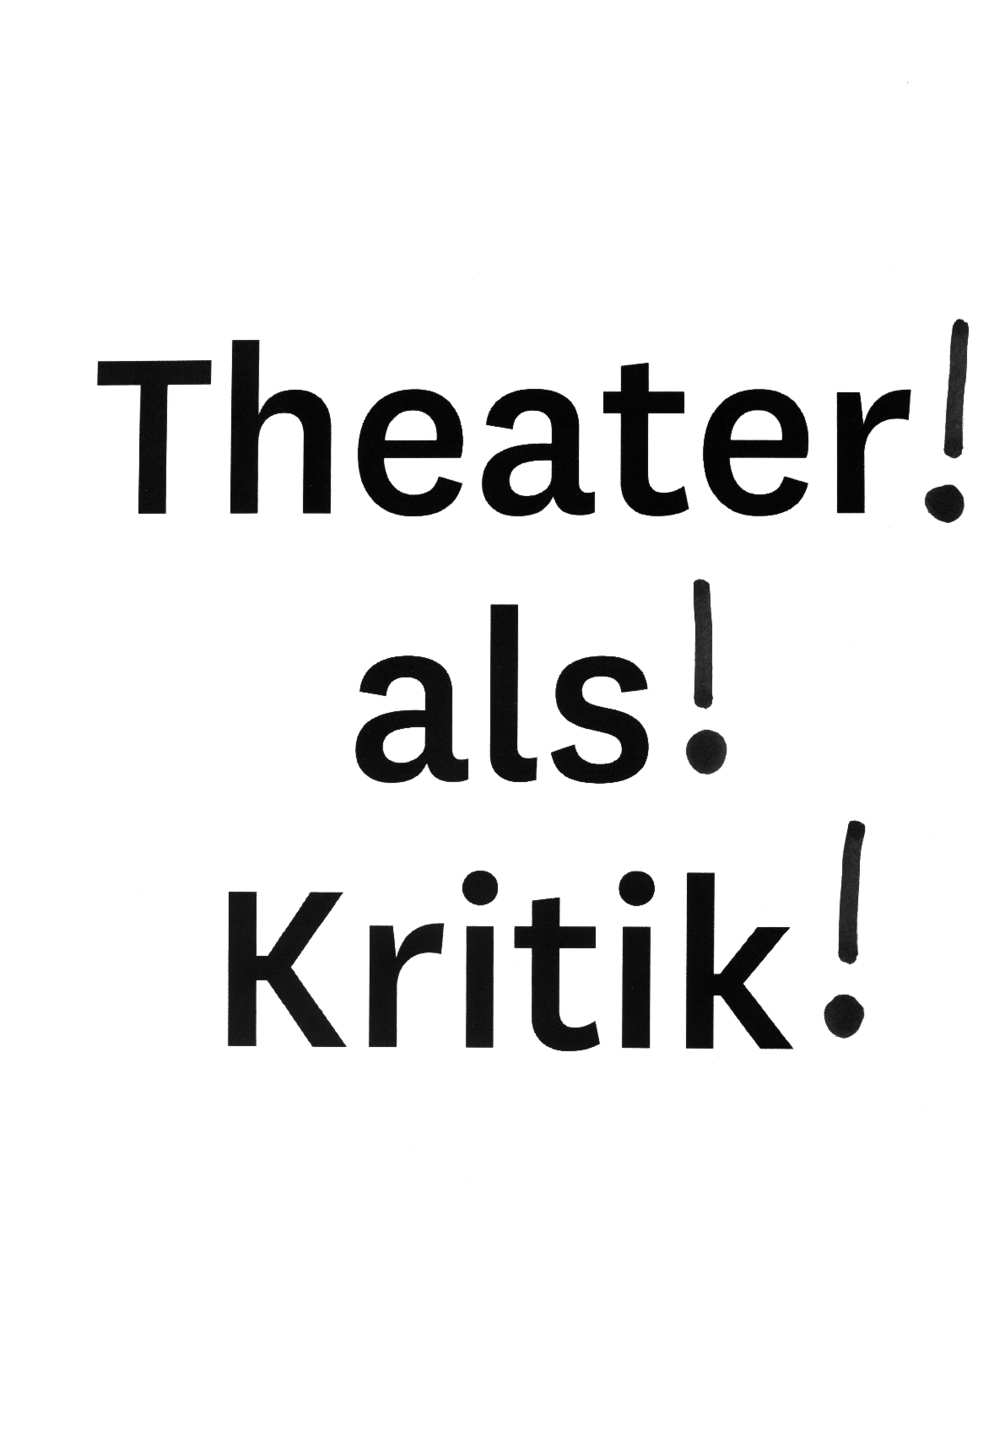 theater-as-critique-slip-06-1005x1435px